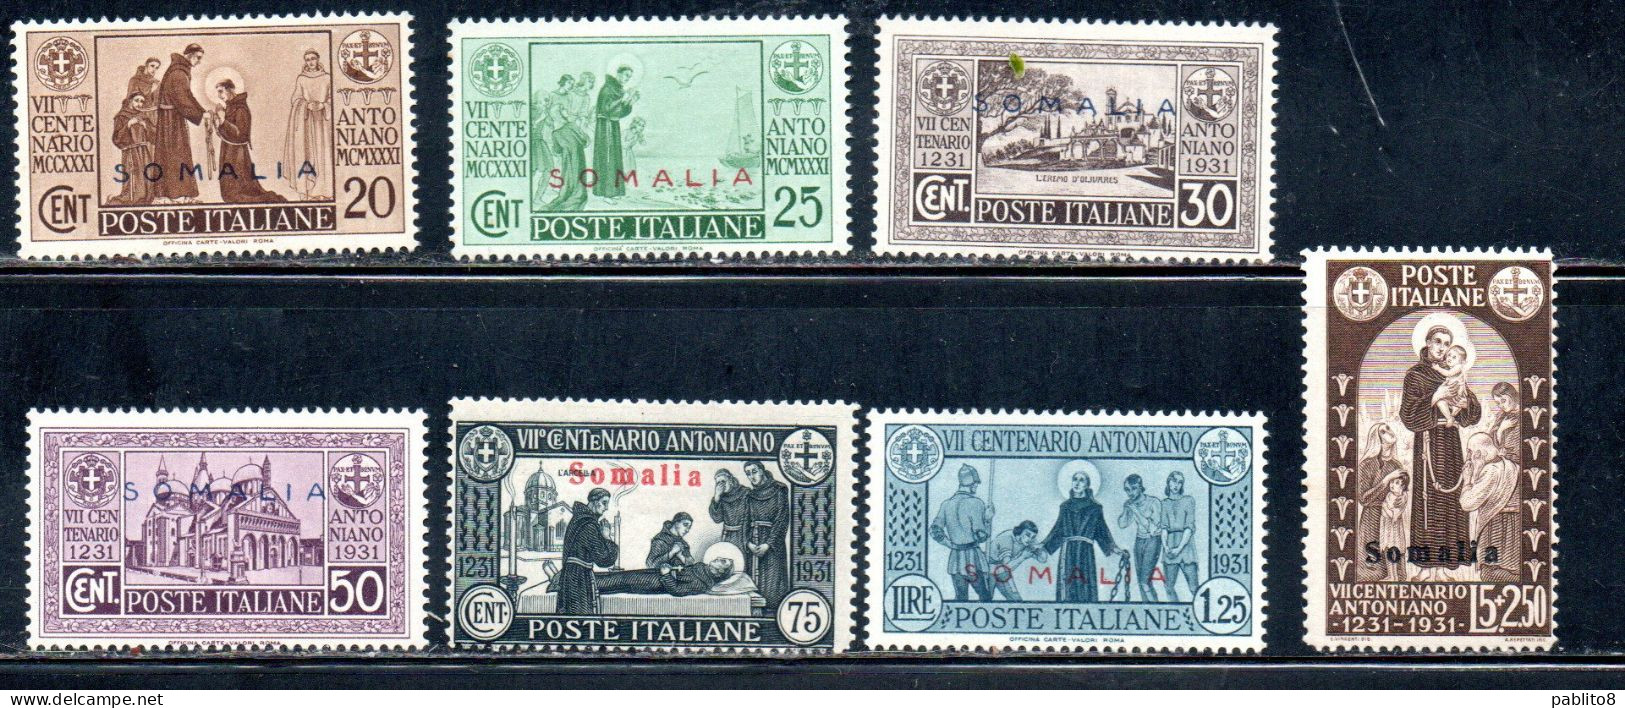 COLONIE ITALIANE SOMALIA 1931 S. SANT'ANTONIO SERIE COMPLETA COMPLETE SET MNH - Somalie